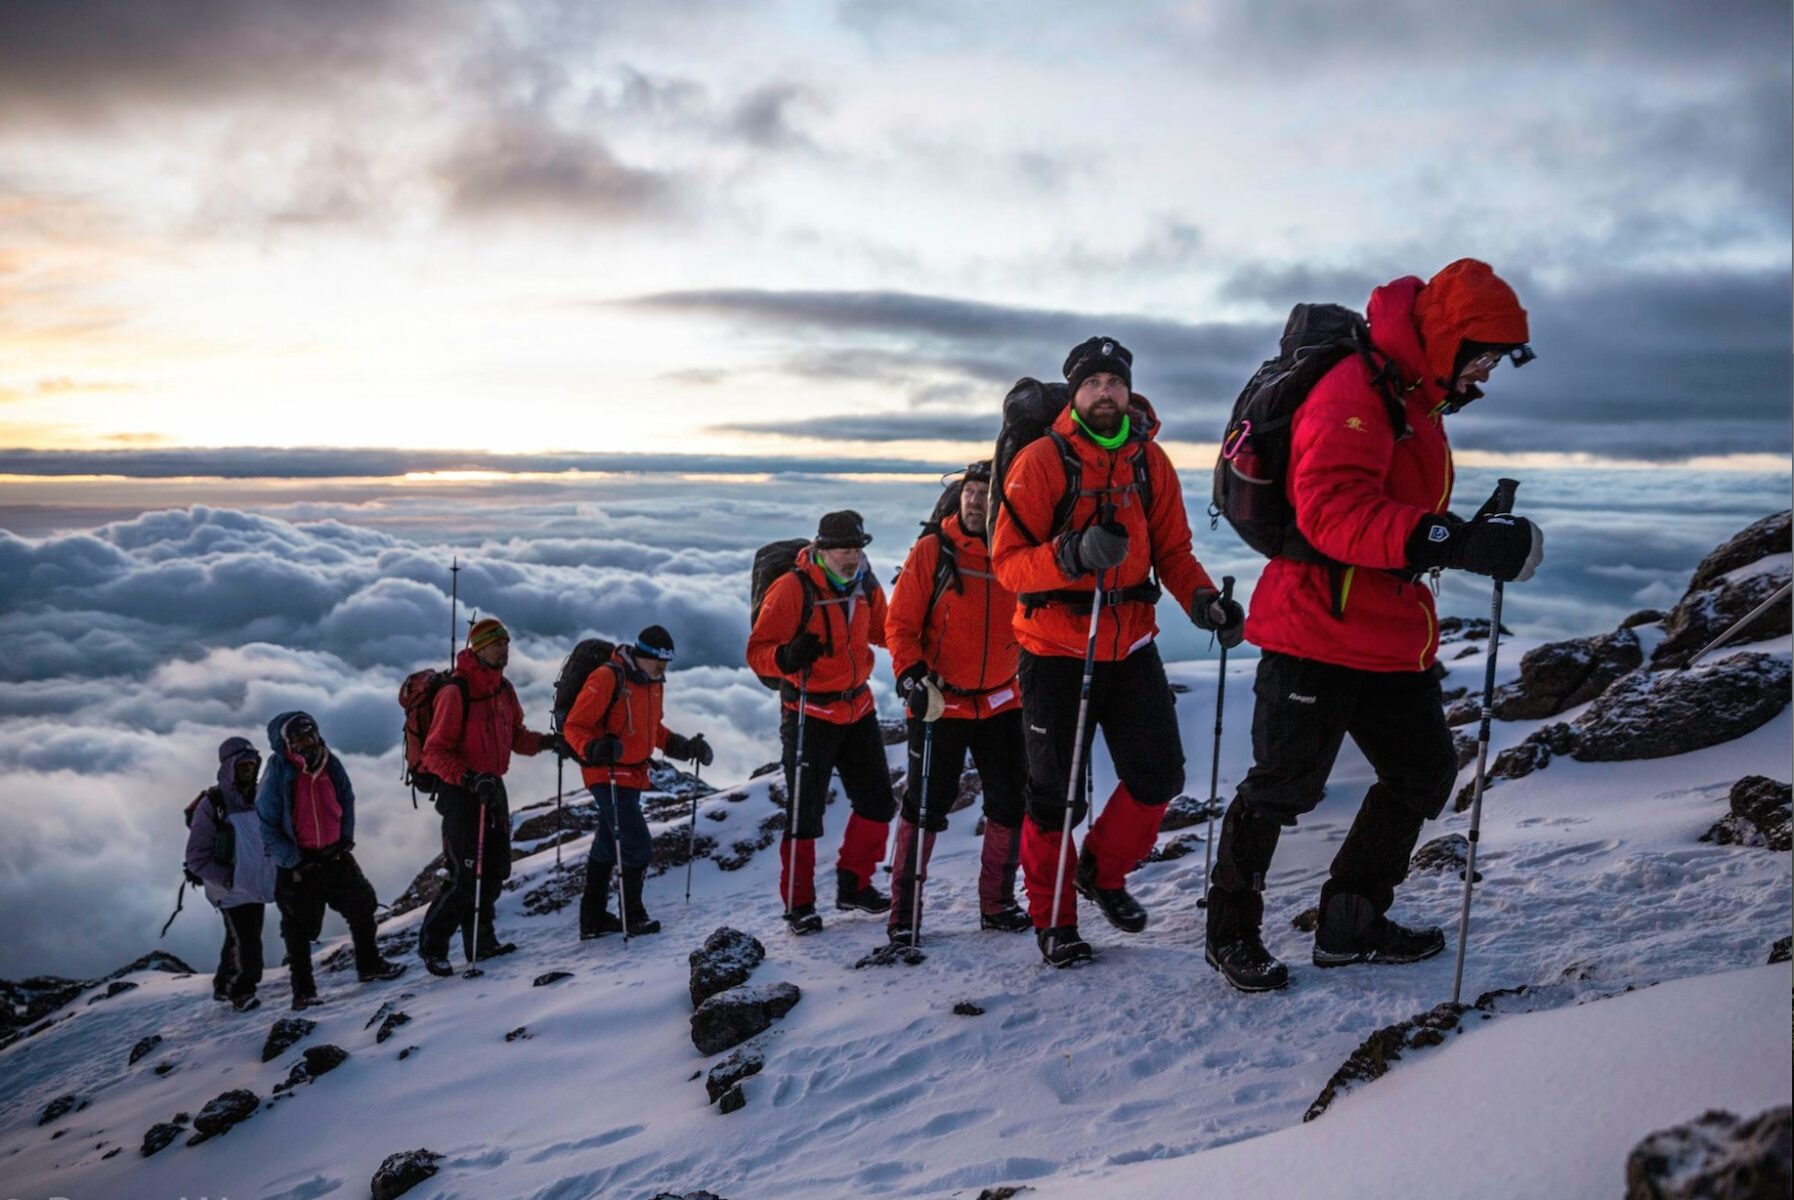 The diversity of Kilimanjaro experience